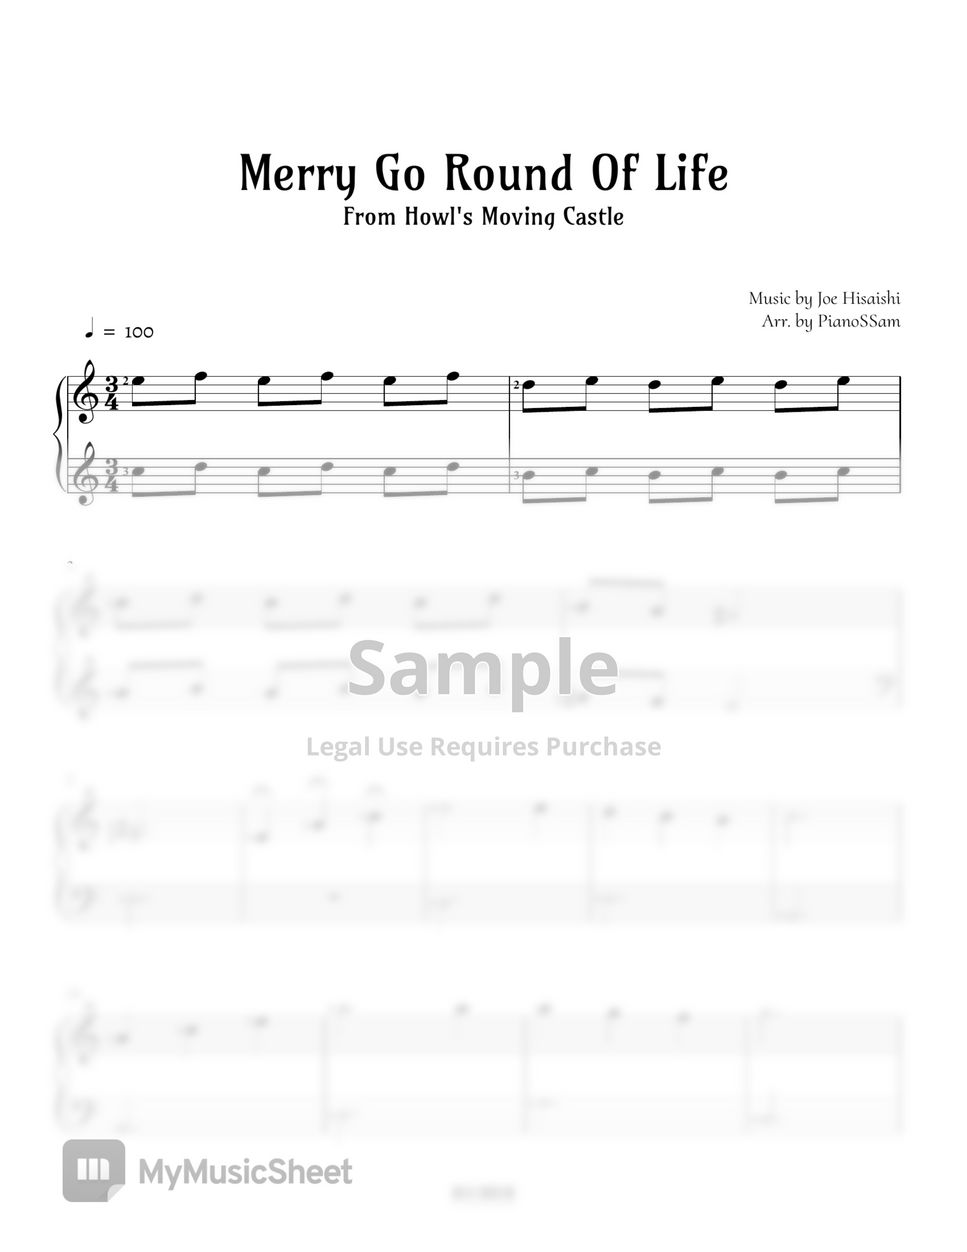 Joe Hisaishi - [Easy] Merry go round of life-人生のメリーゴーランド (인생의 회전목마) | Piano Arrangement (하울의 움직이는 성) by PianoSSam